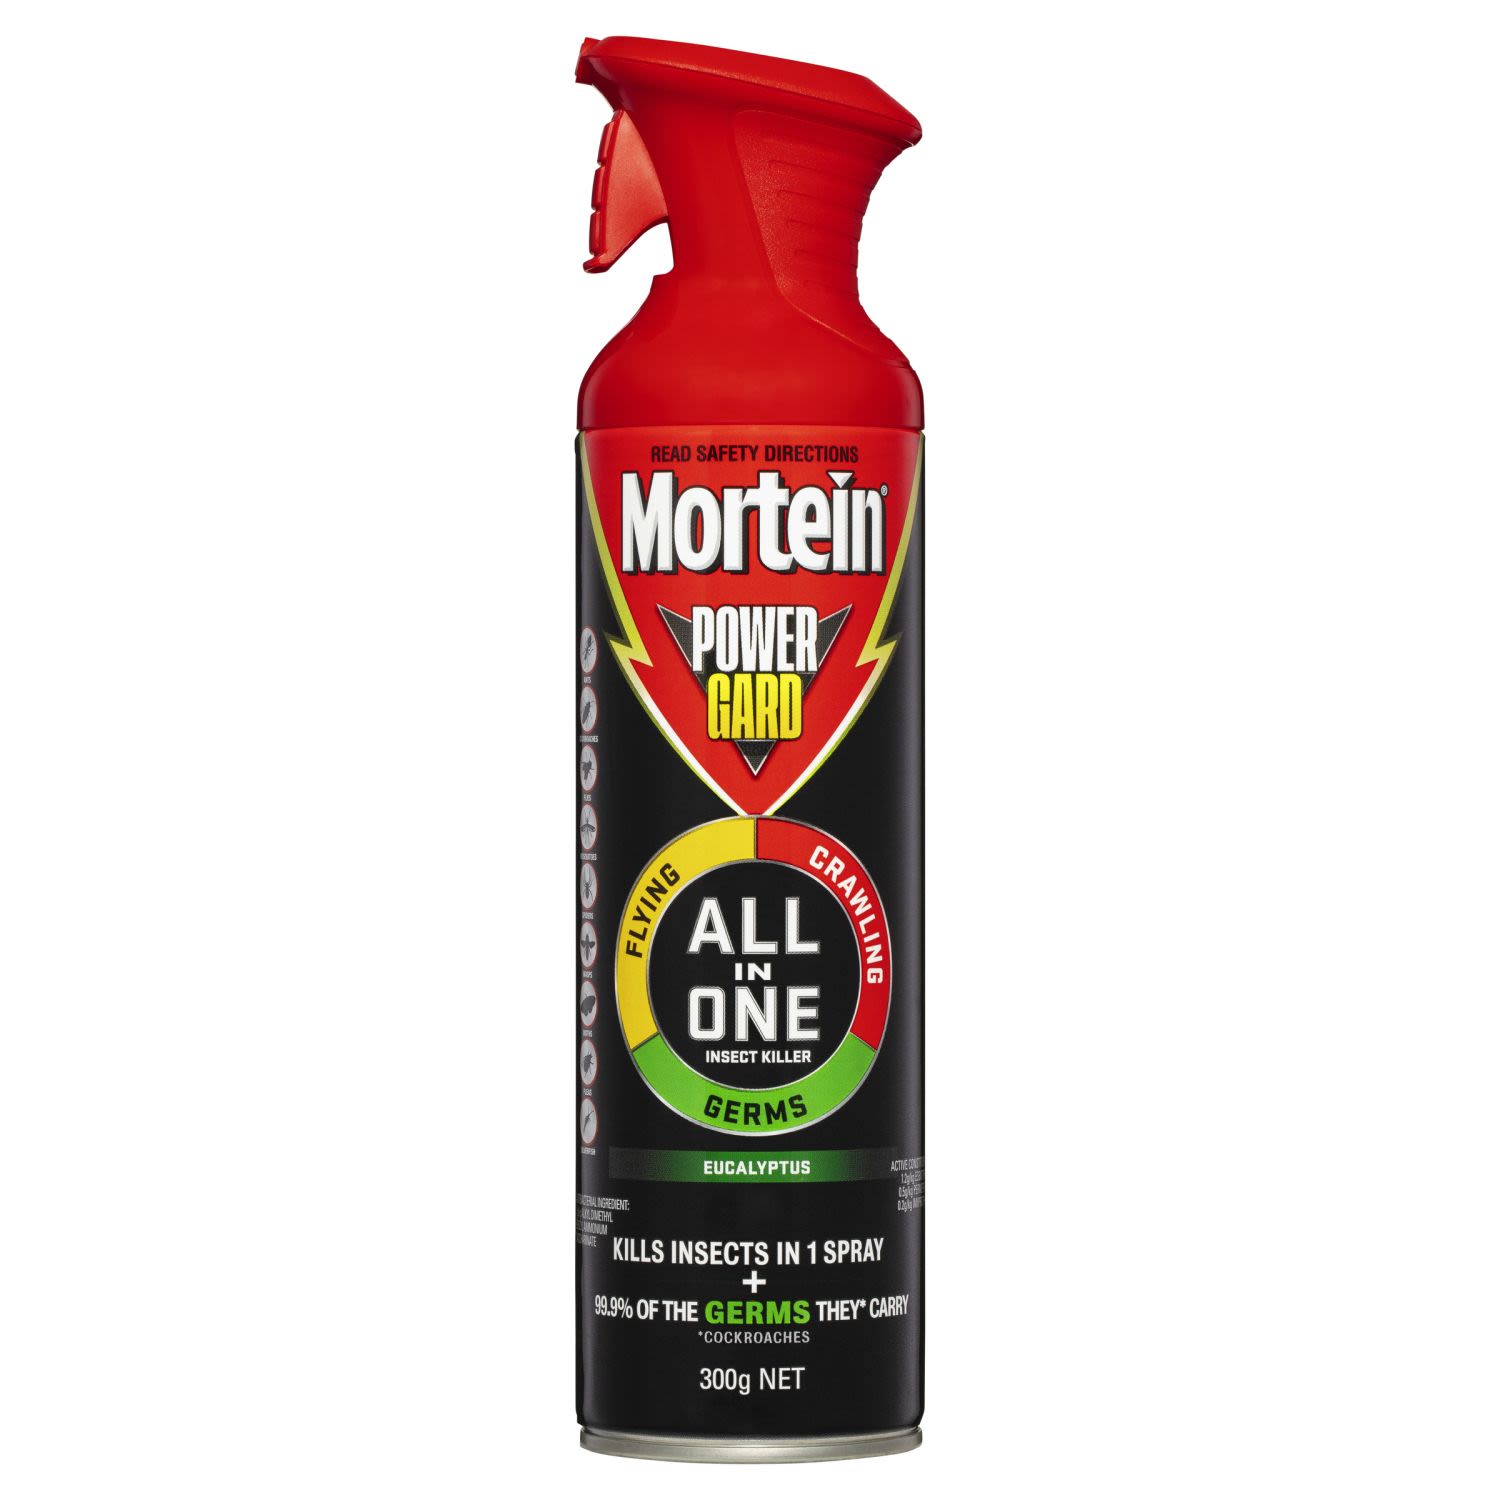 Mortein Powergard All In One Insect Killer Spray Eucalyptus, 300 Gram